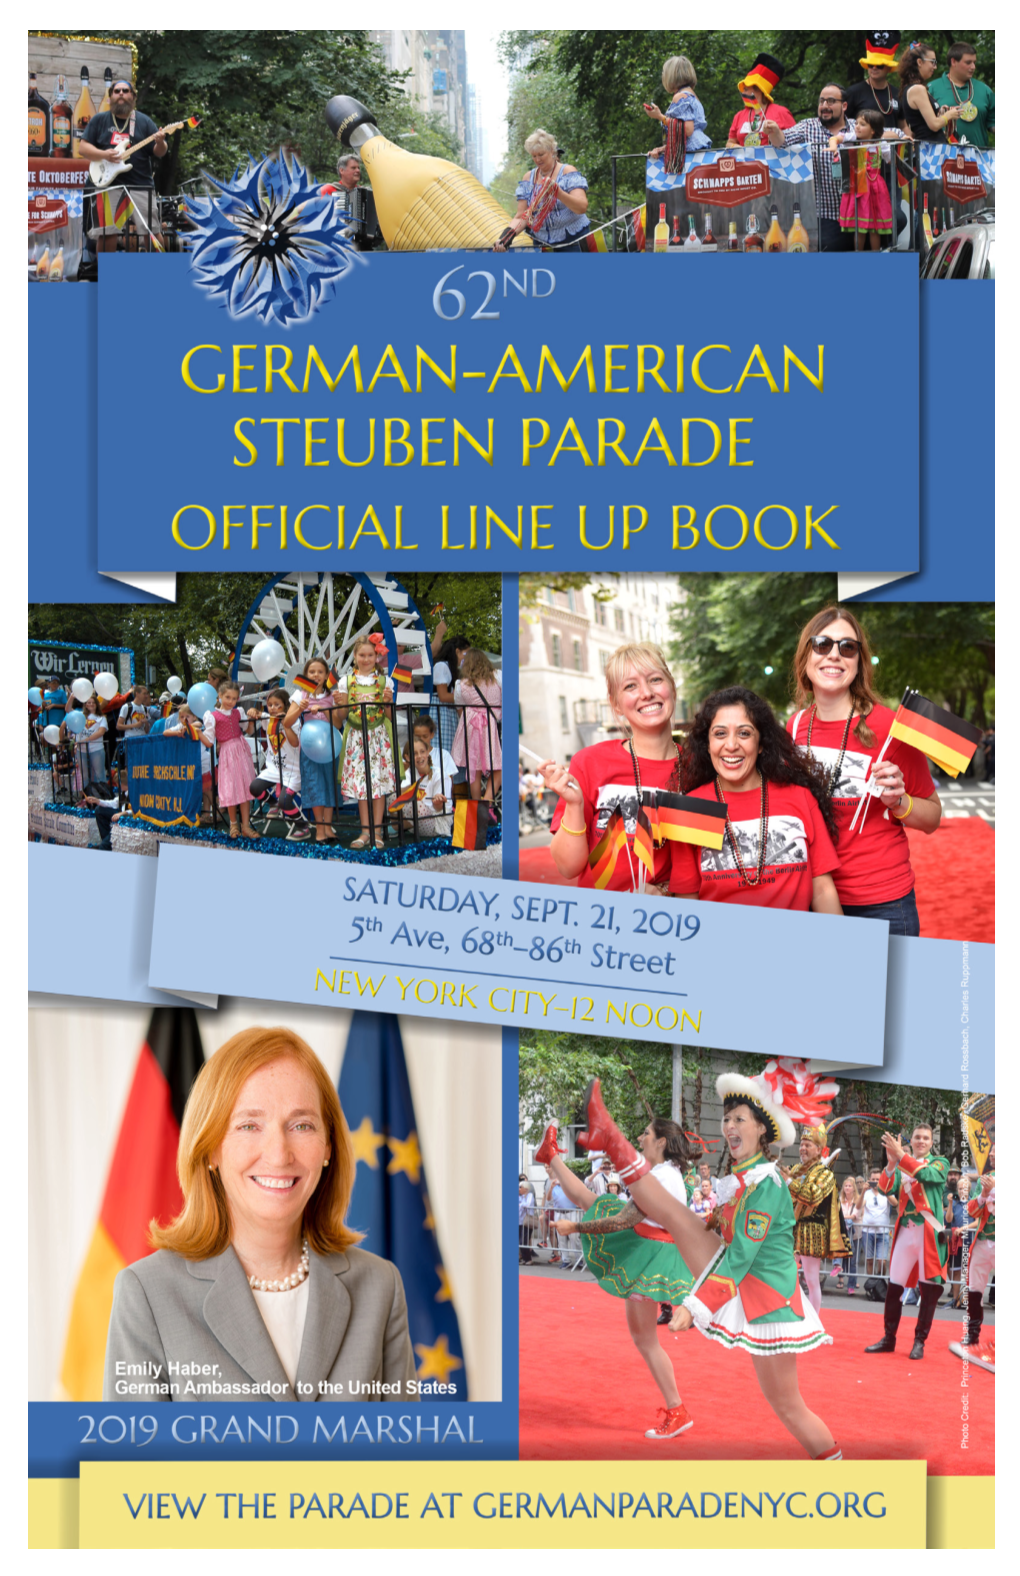 The 2019 Steuben Parade Line up Book